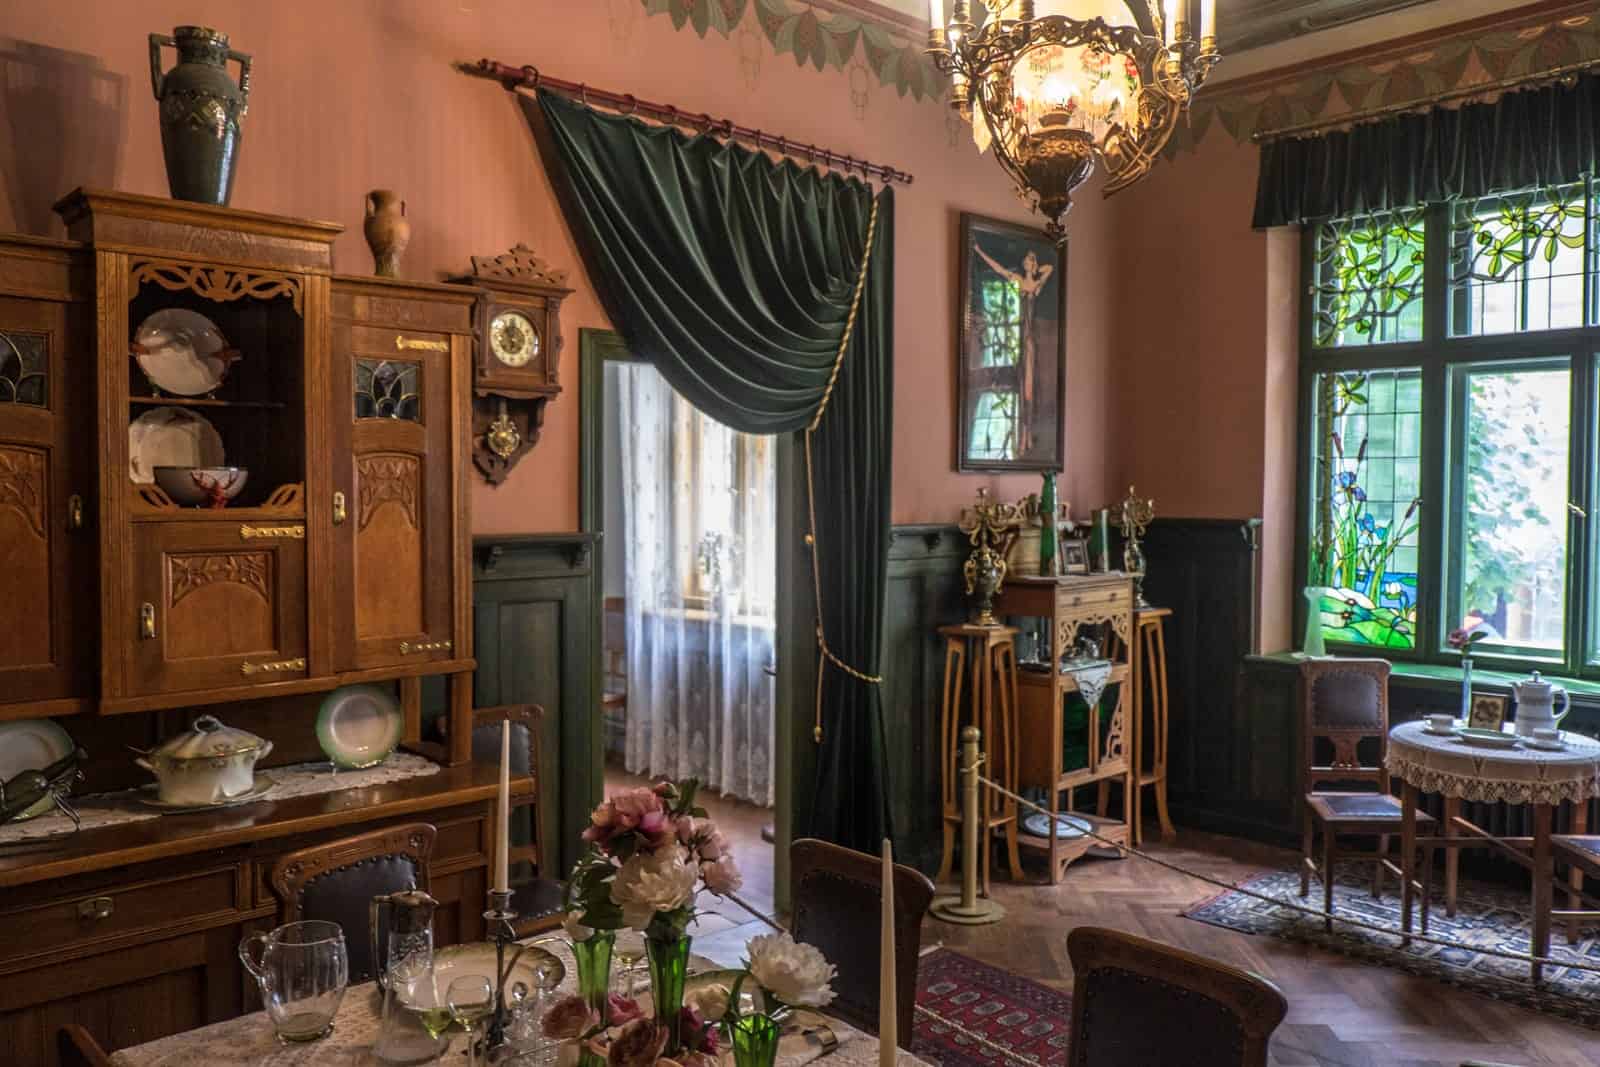 Dining room inside the Art Nouveau museum in Riga, Latvia